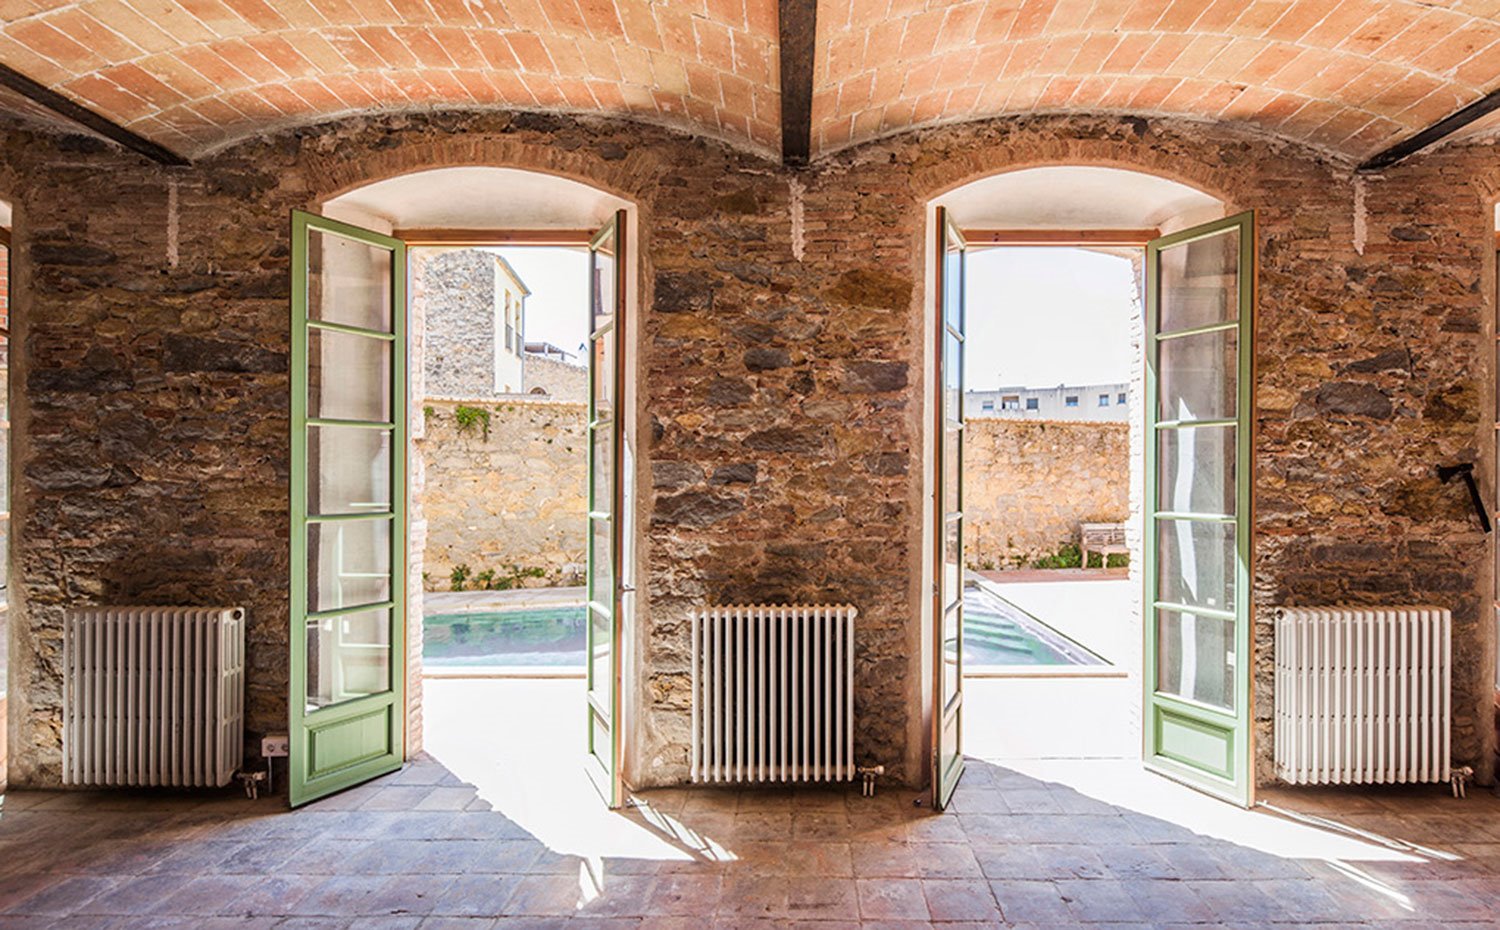 Interior vivienda con volta catalana, pared de piedra, aperturas a exterior con piscina en terraza, radiadores blancos en pared